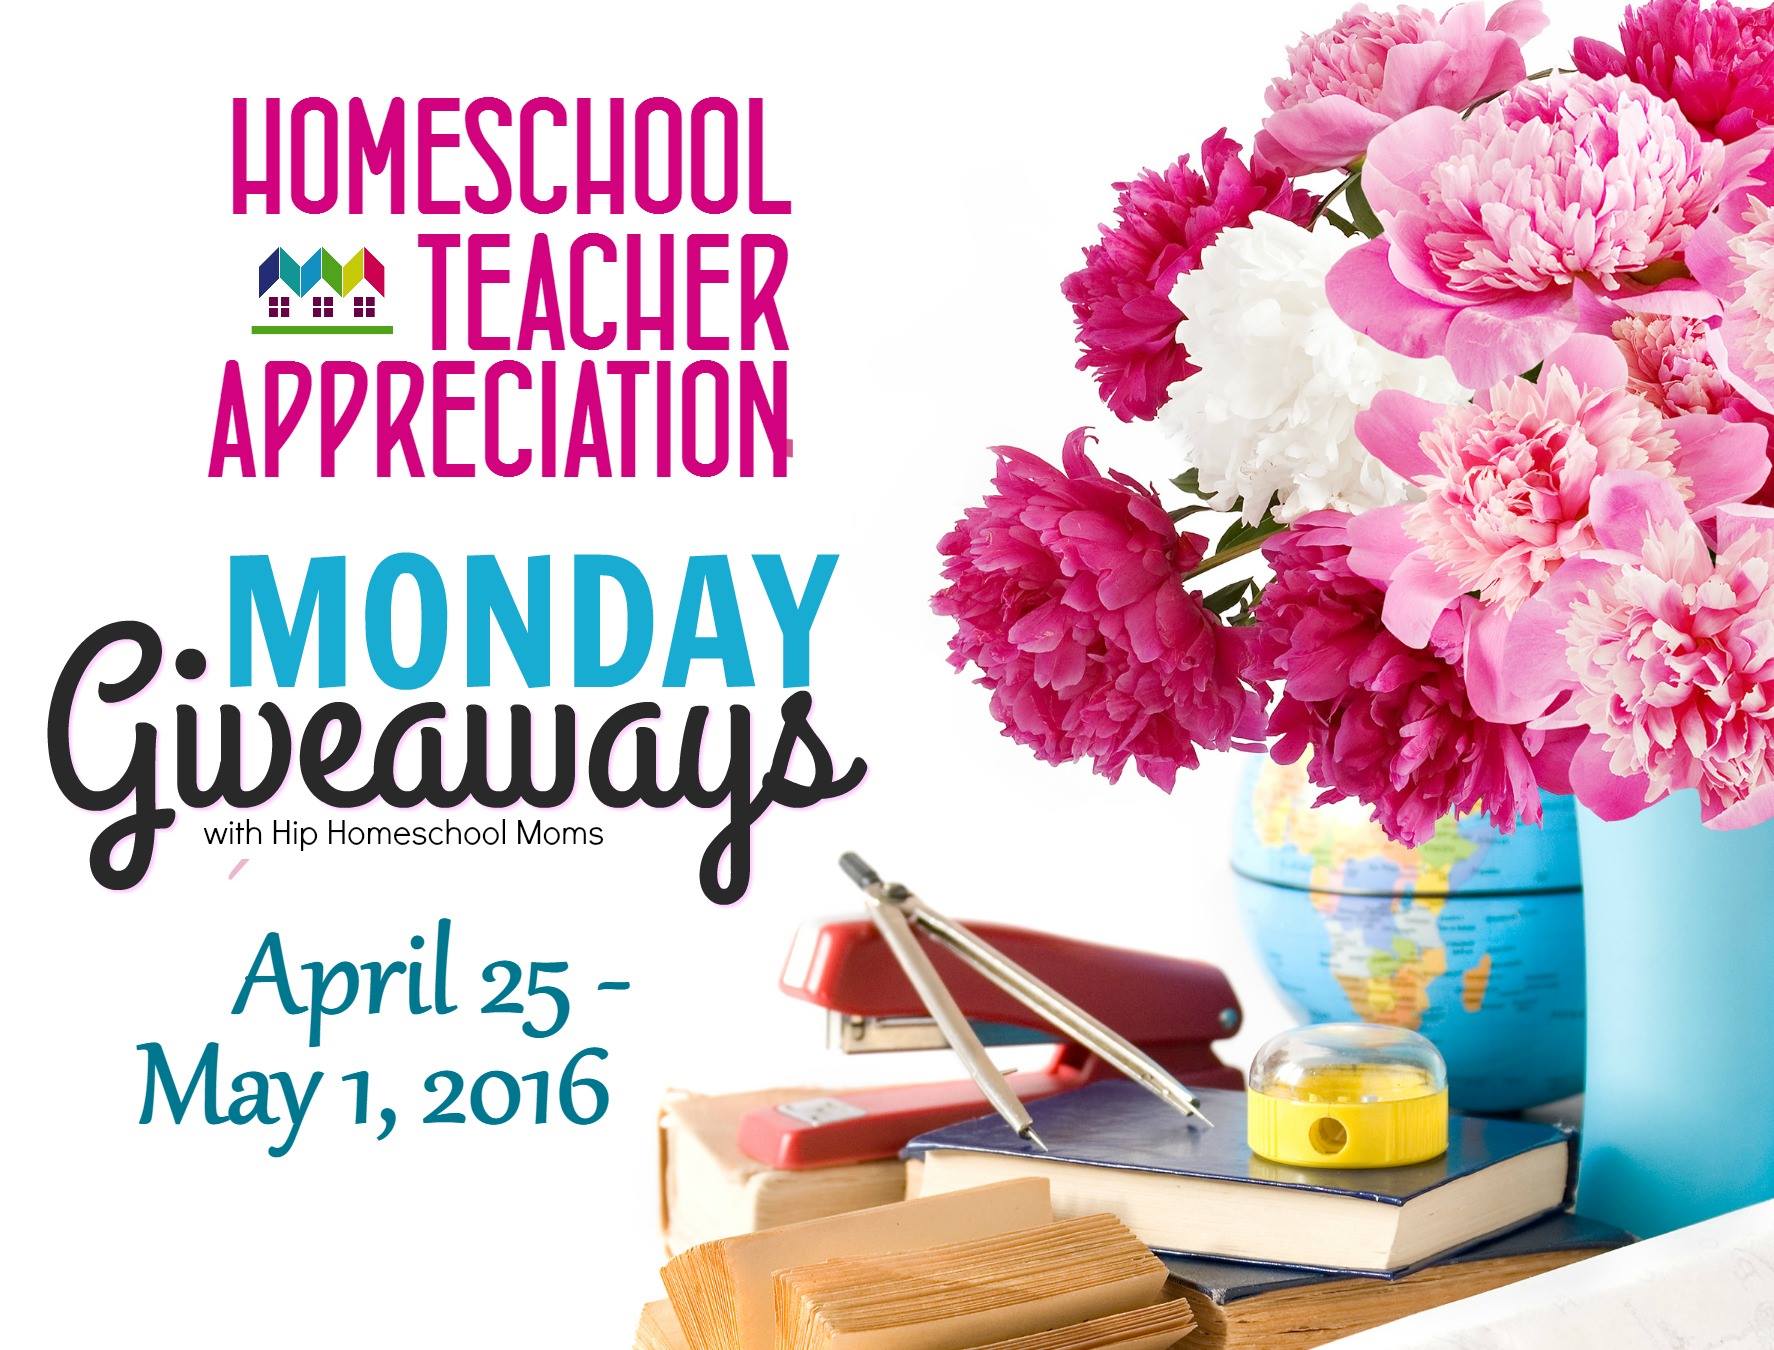 Monday’s Giveaways for Homeschool Teacher Appreciation Week